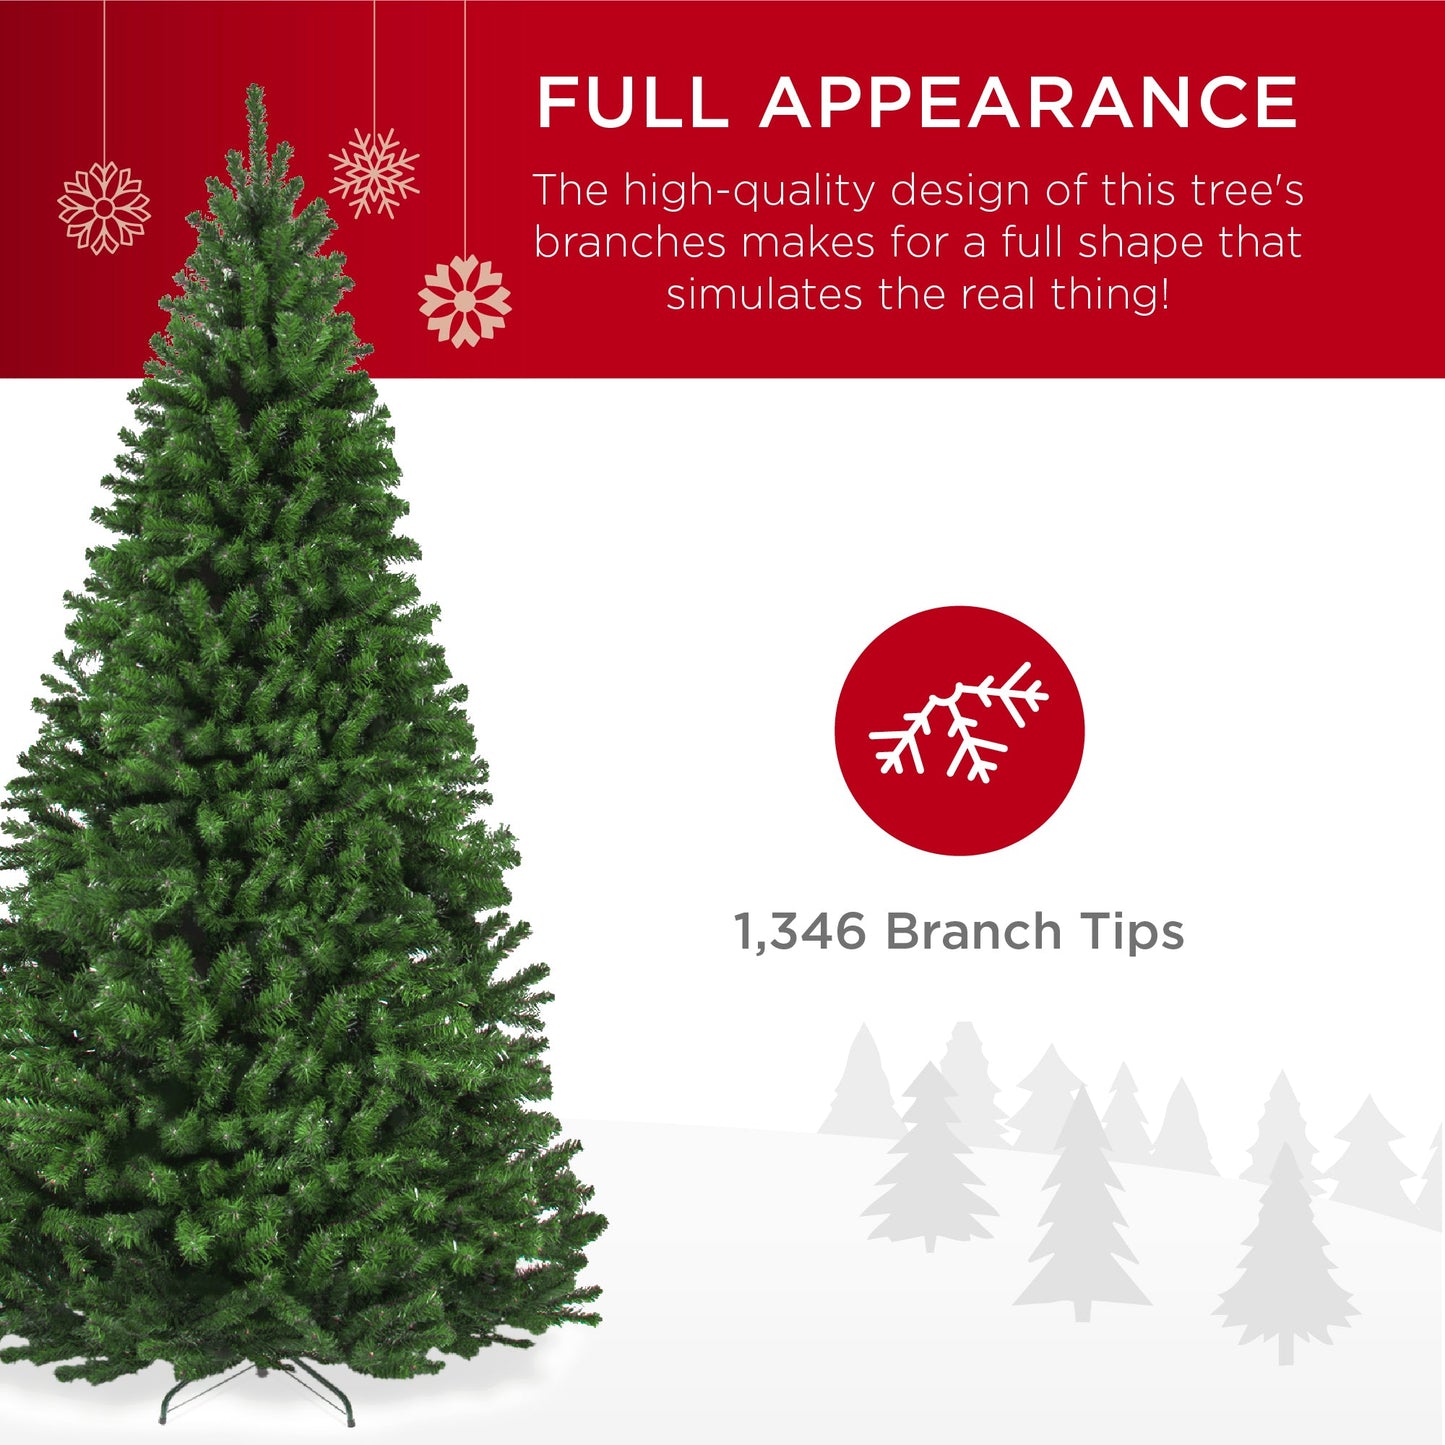 Premium Artificial Spruce Christmas Tree w/ Foldable Metal Base